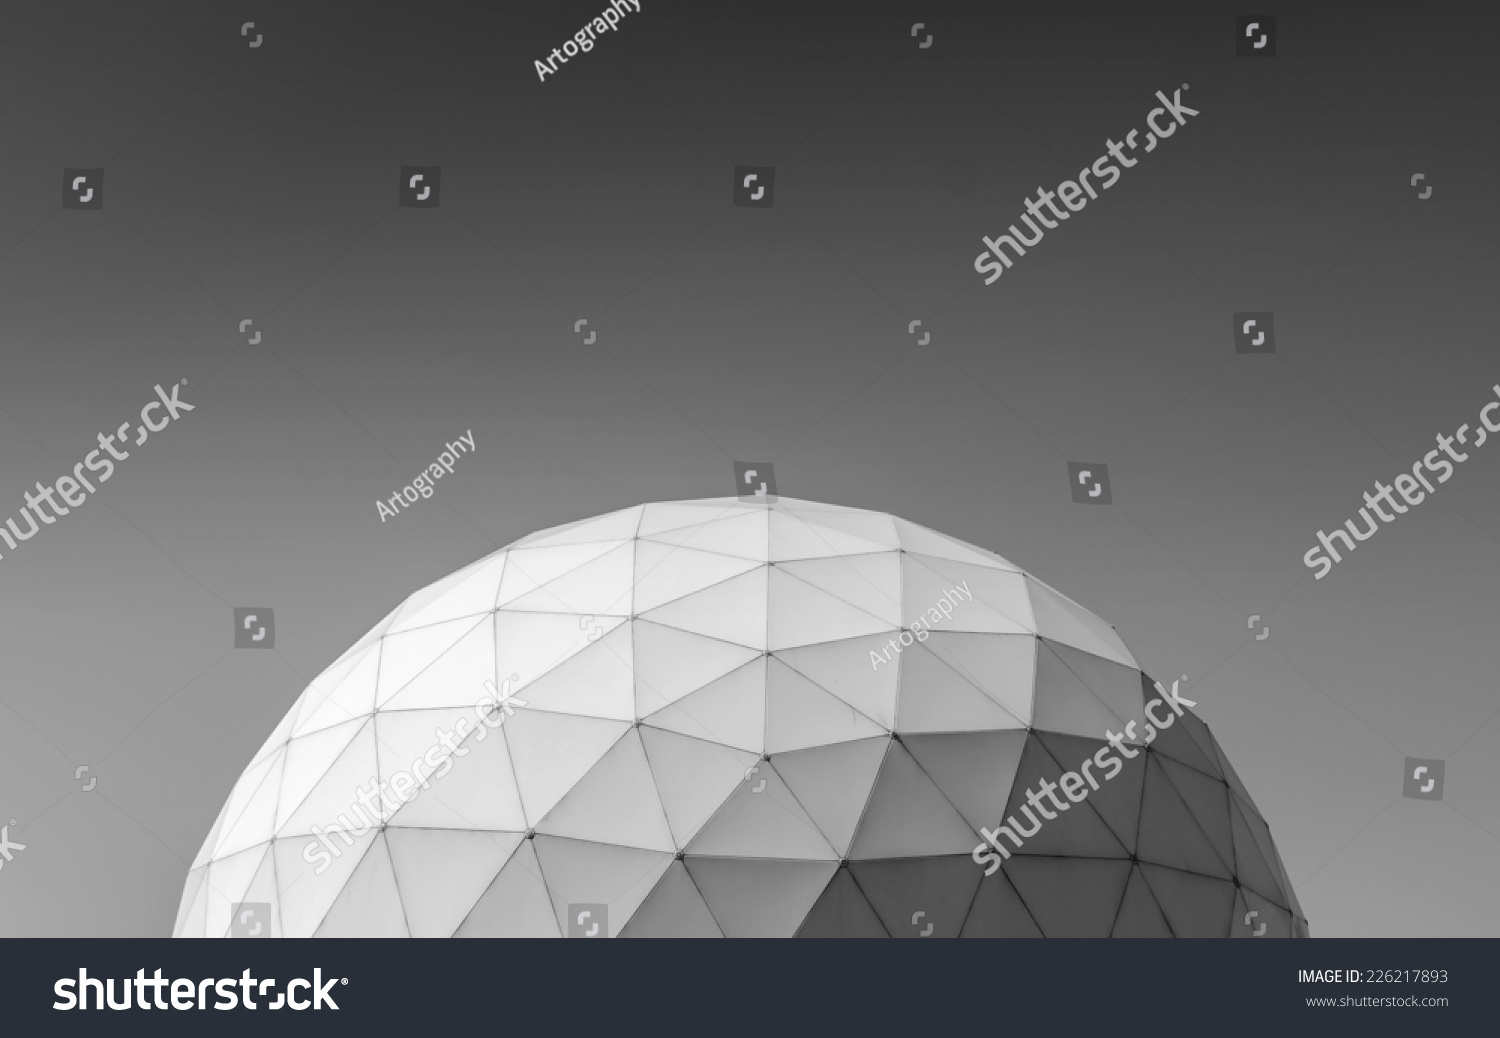 361 Pvc sphere Images, Stock Photos & Vectors | Shutterstock